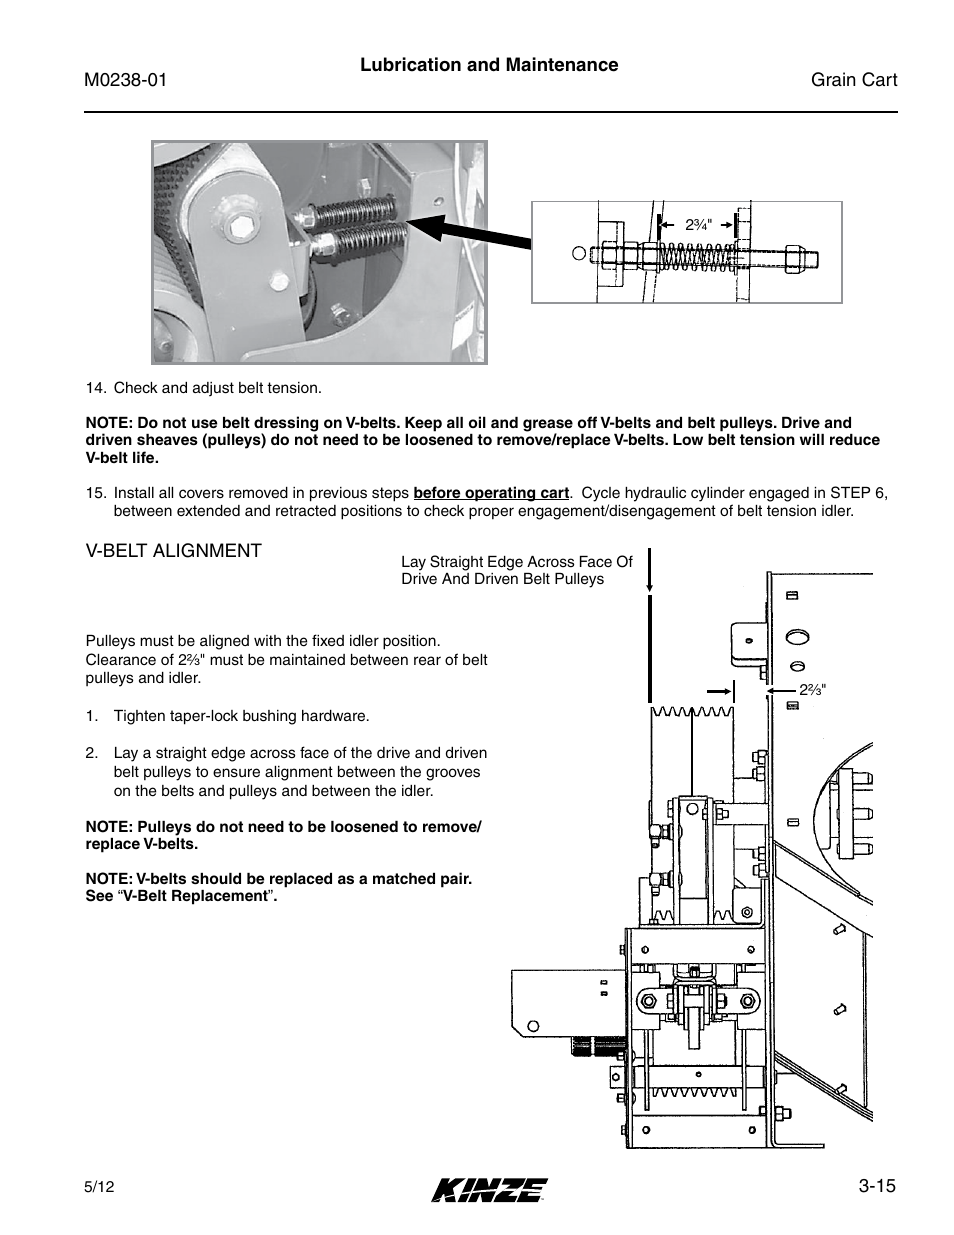 Kinze Grain Carts Rev. 7/14 User Manual | Page 51 / 70